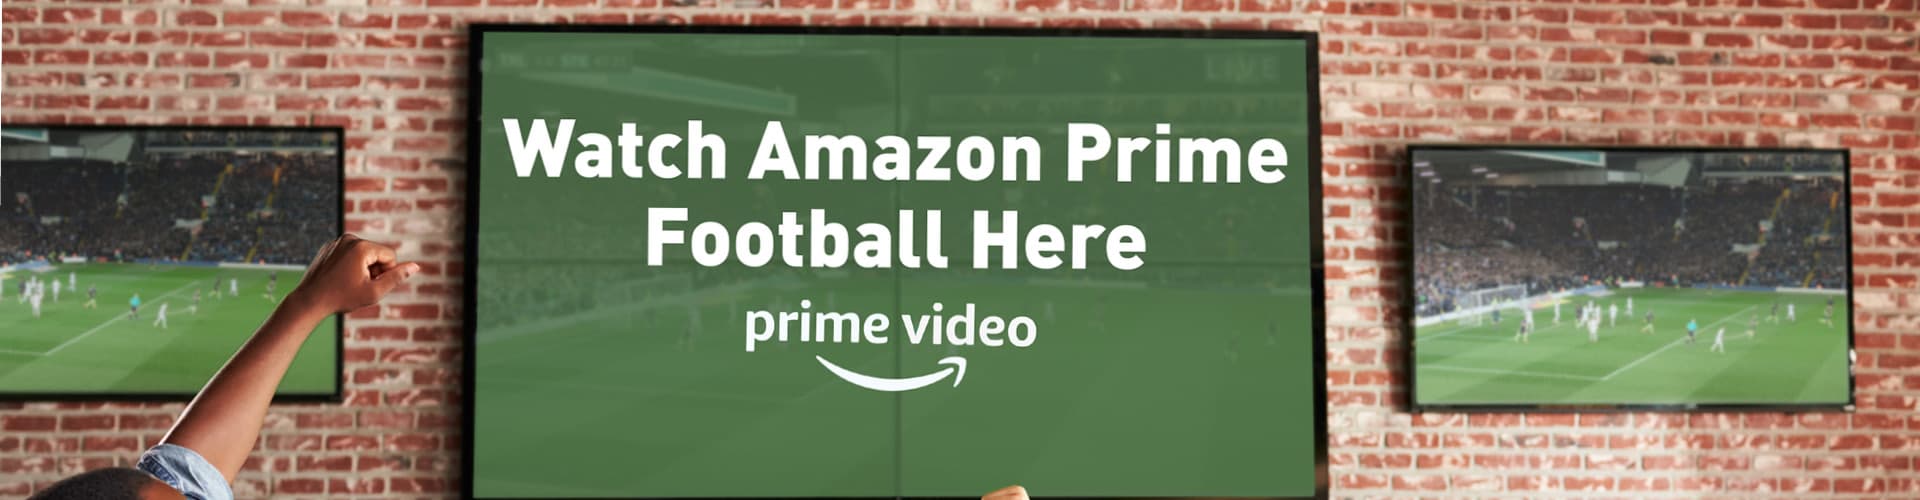 Watch Amazon Prime Football here